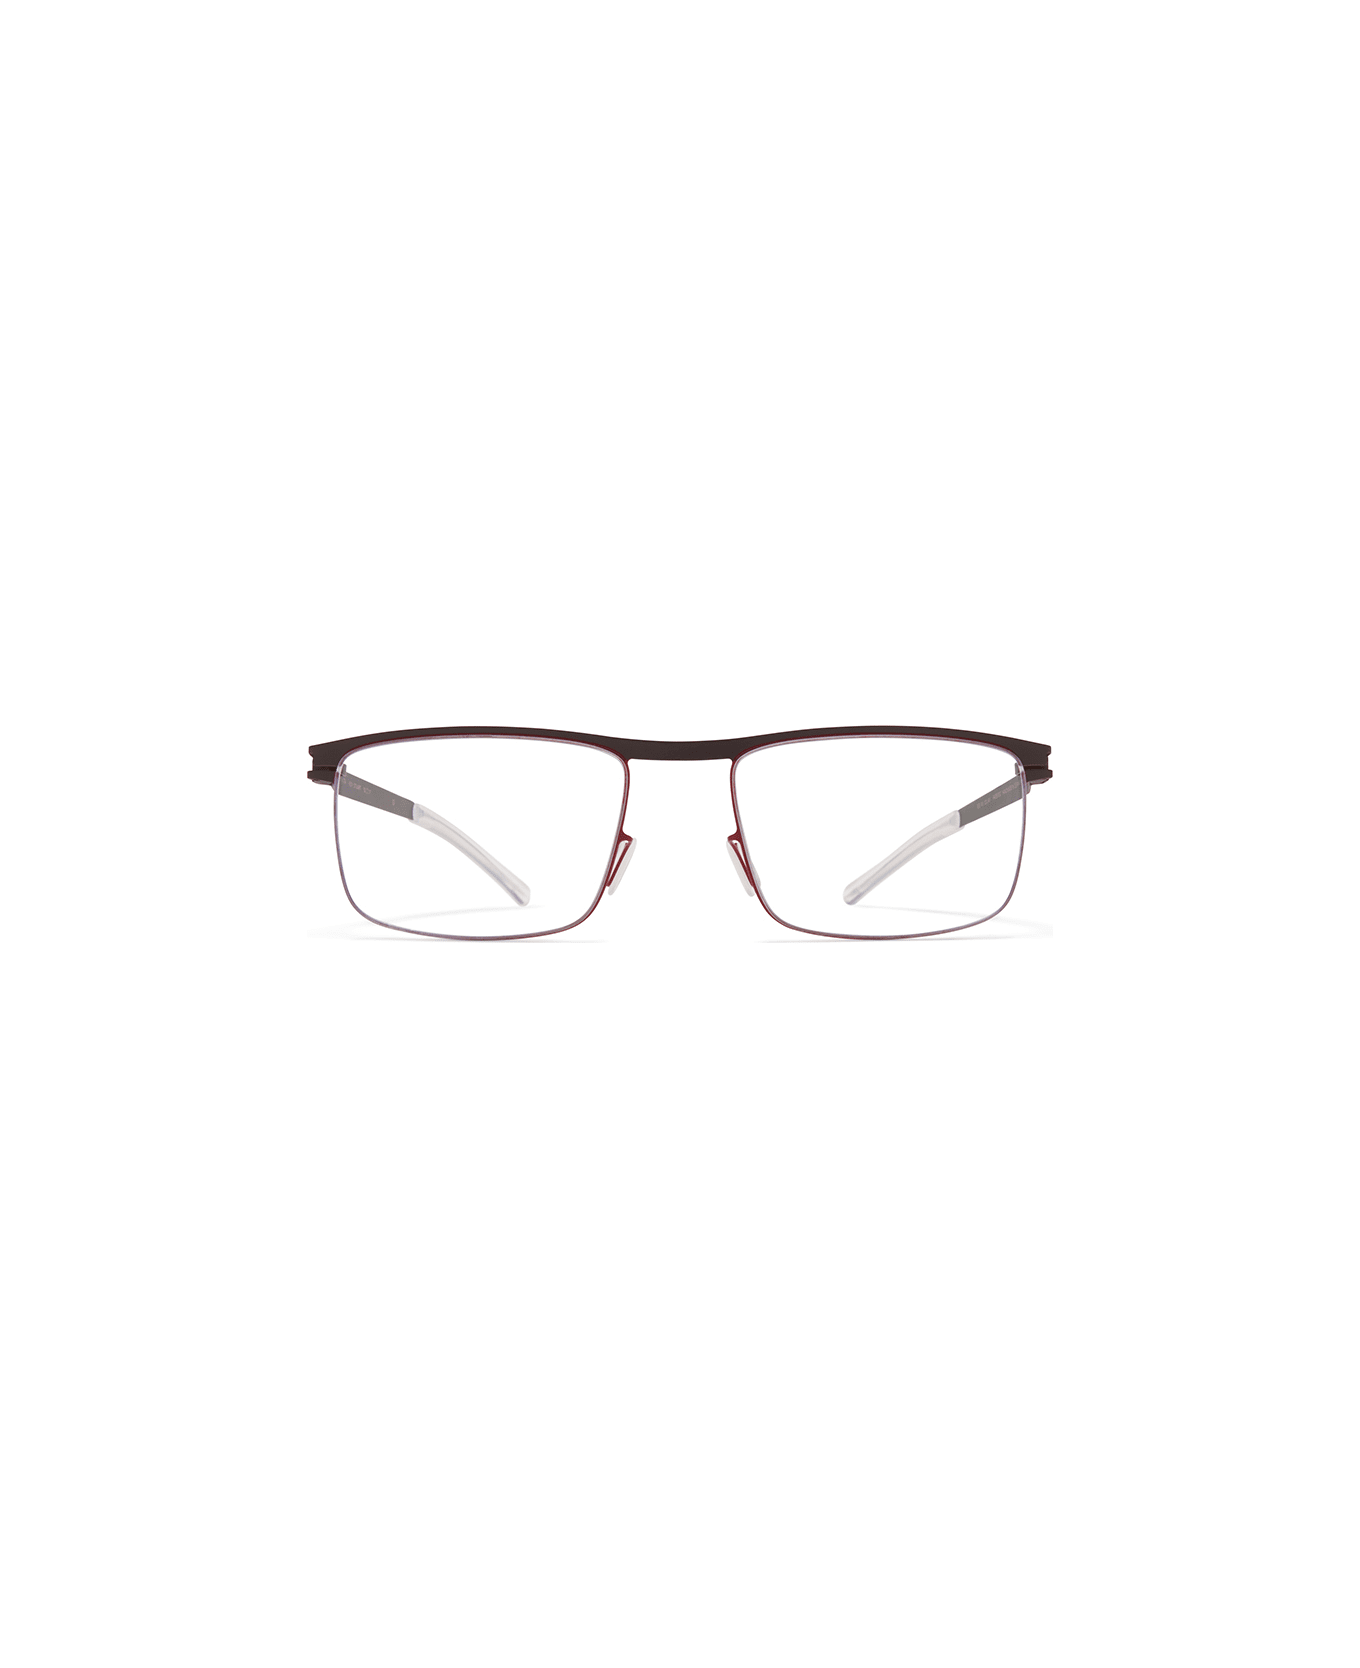 Mykita STUART Eyewear - Ebonybrown/cranberry アイウェア